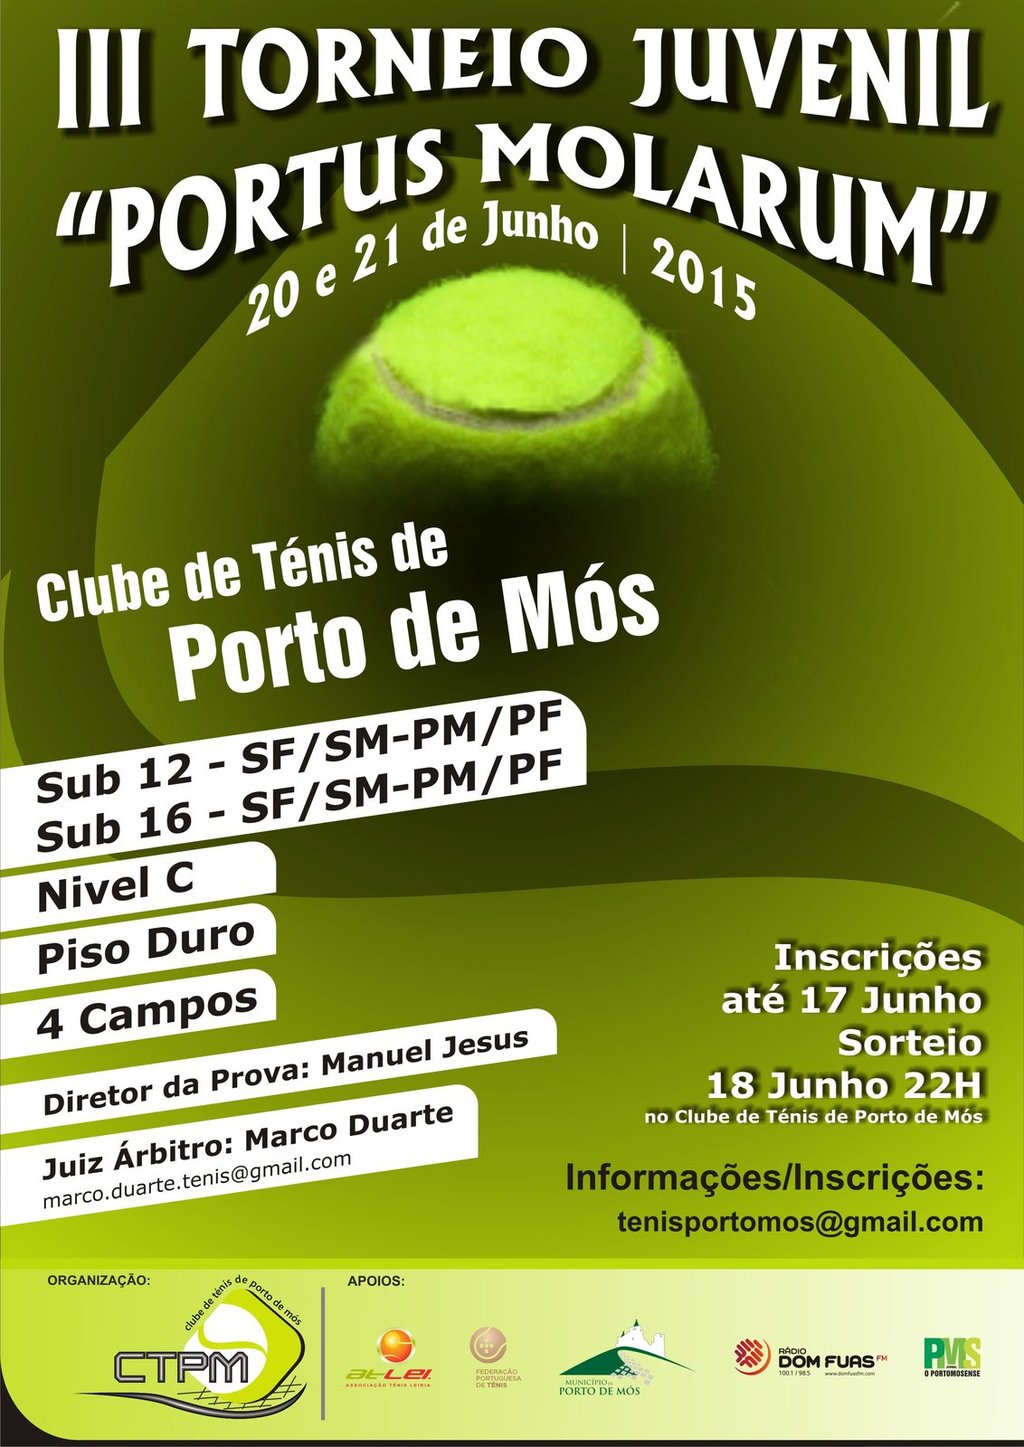 Torneio de ténis portus molarum